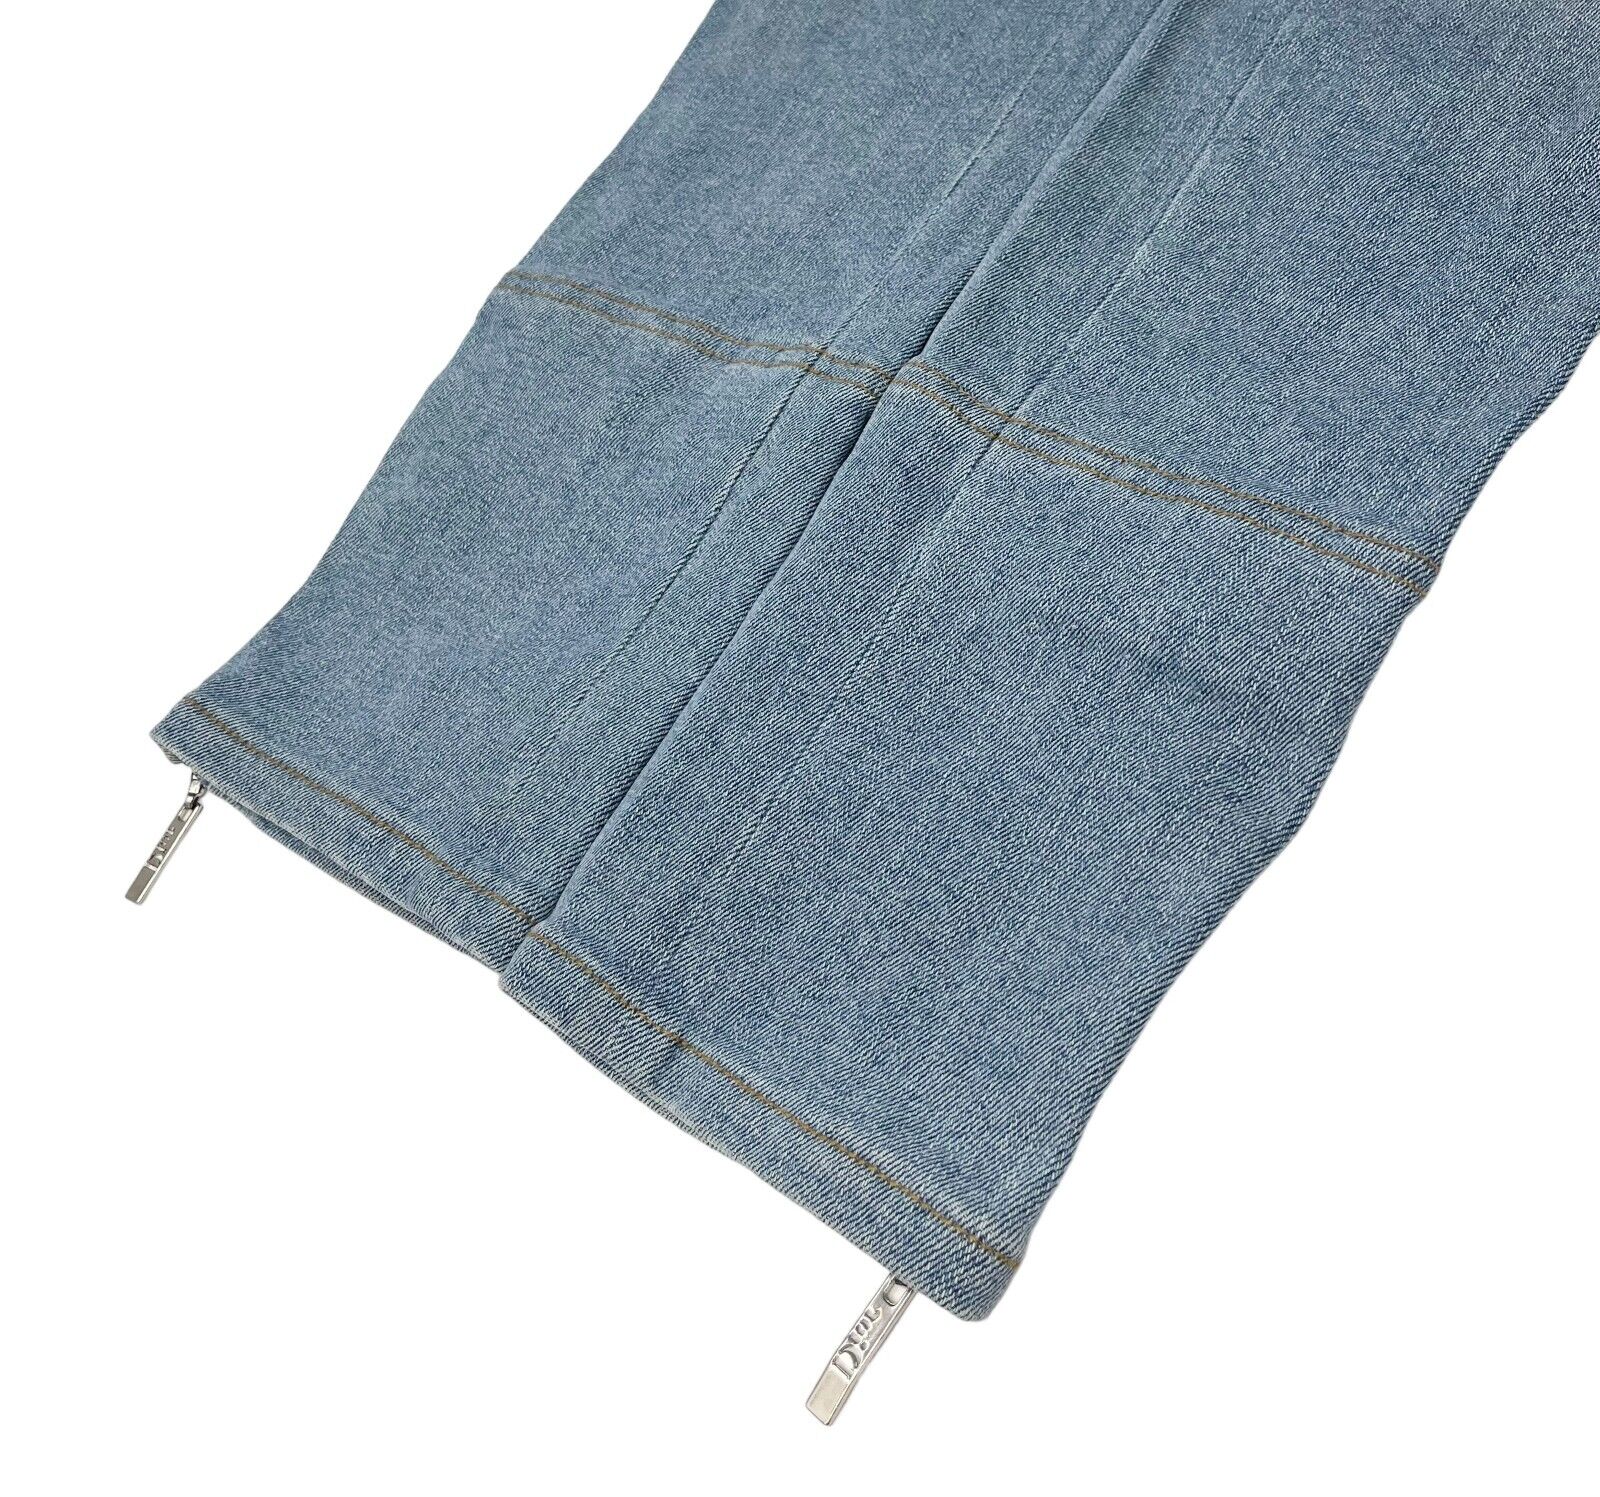 Christian Dior Vintage Logo Denim Jeans Pants Embroidery Blue Cotton Rank AB+